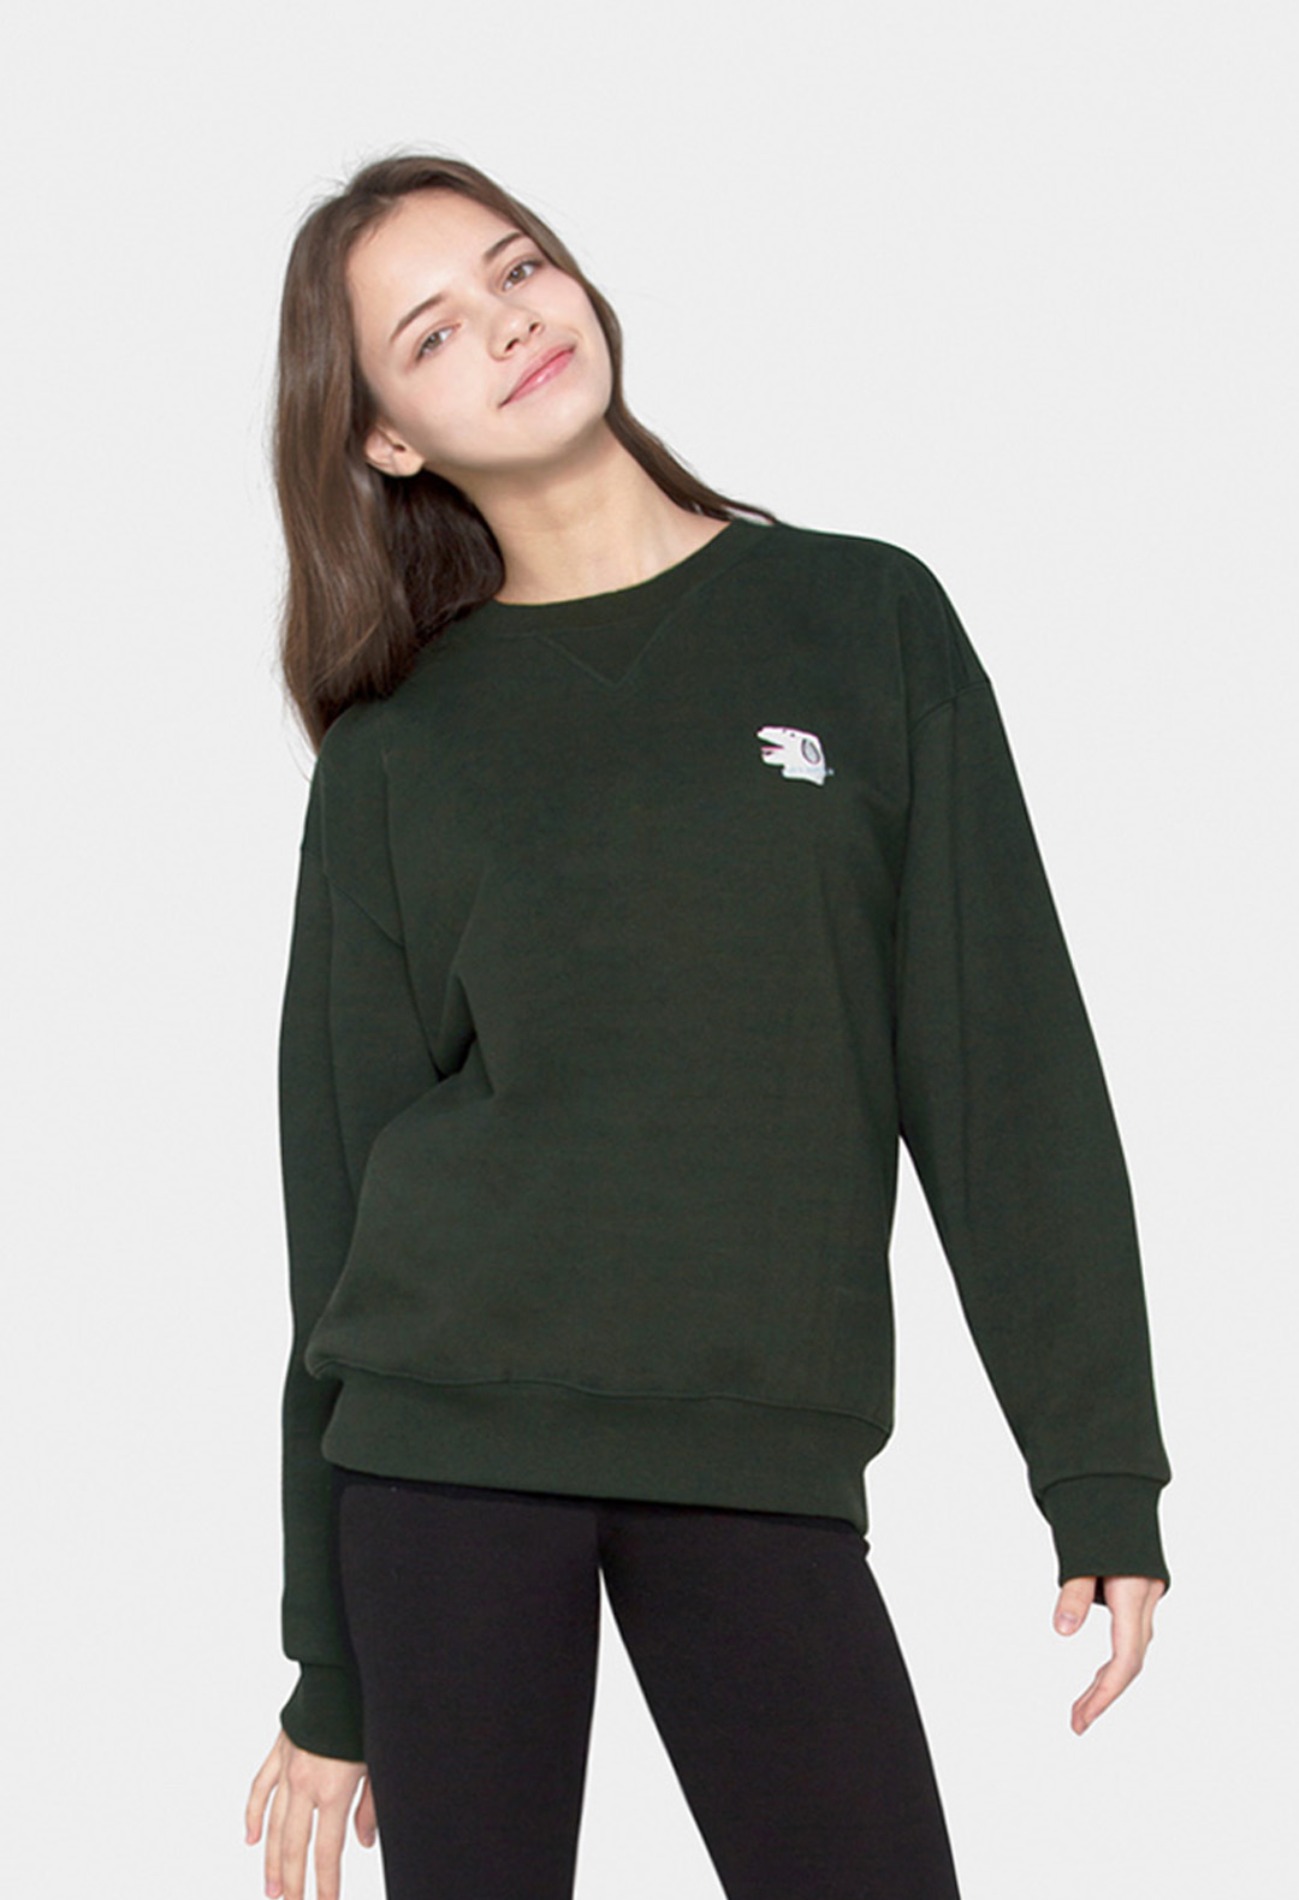 keek [Unisex] Doggy Sweatshirts - Deep Green 스트릿패션 유니섹스브랜드 커플시밀러룩 남자쇼핑몰 여성의류쇼핑몰 후드티 힙색